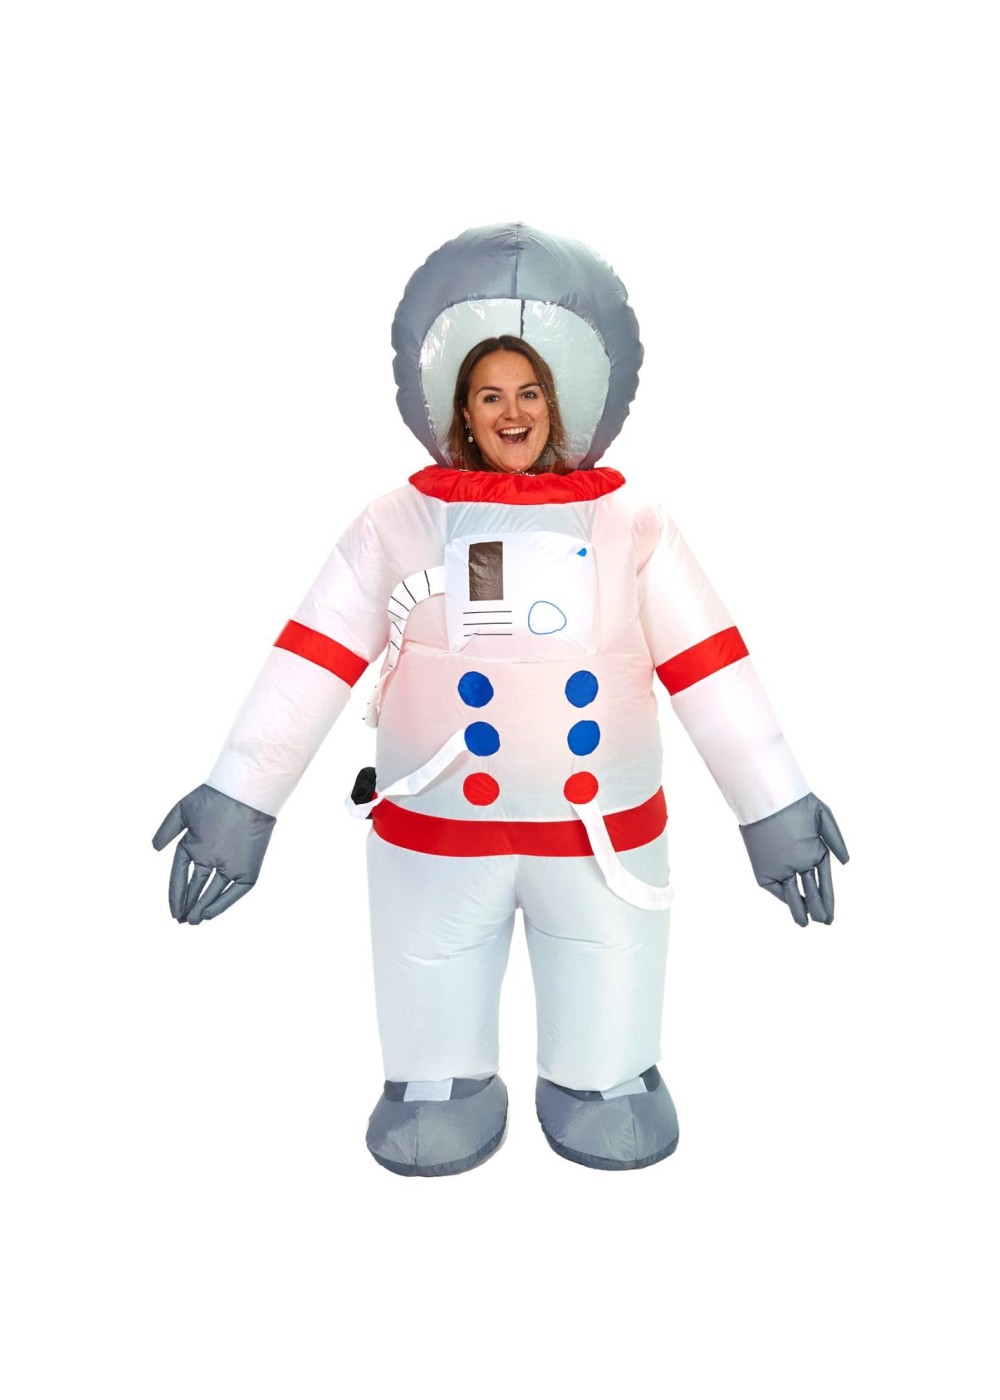  Astronaut Inflatable Costume